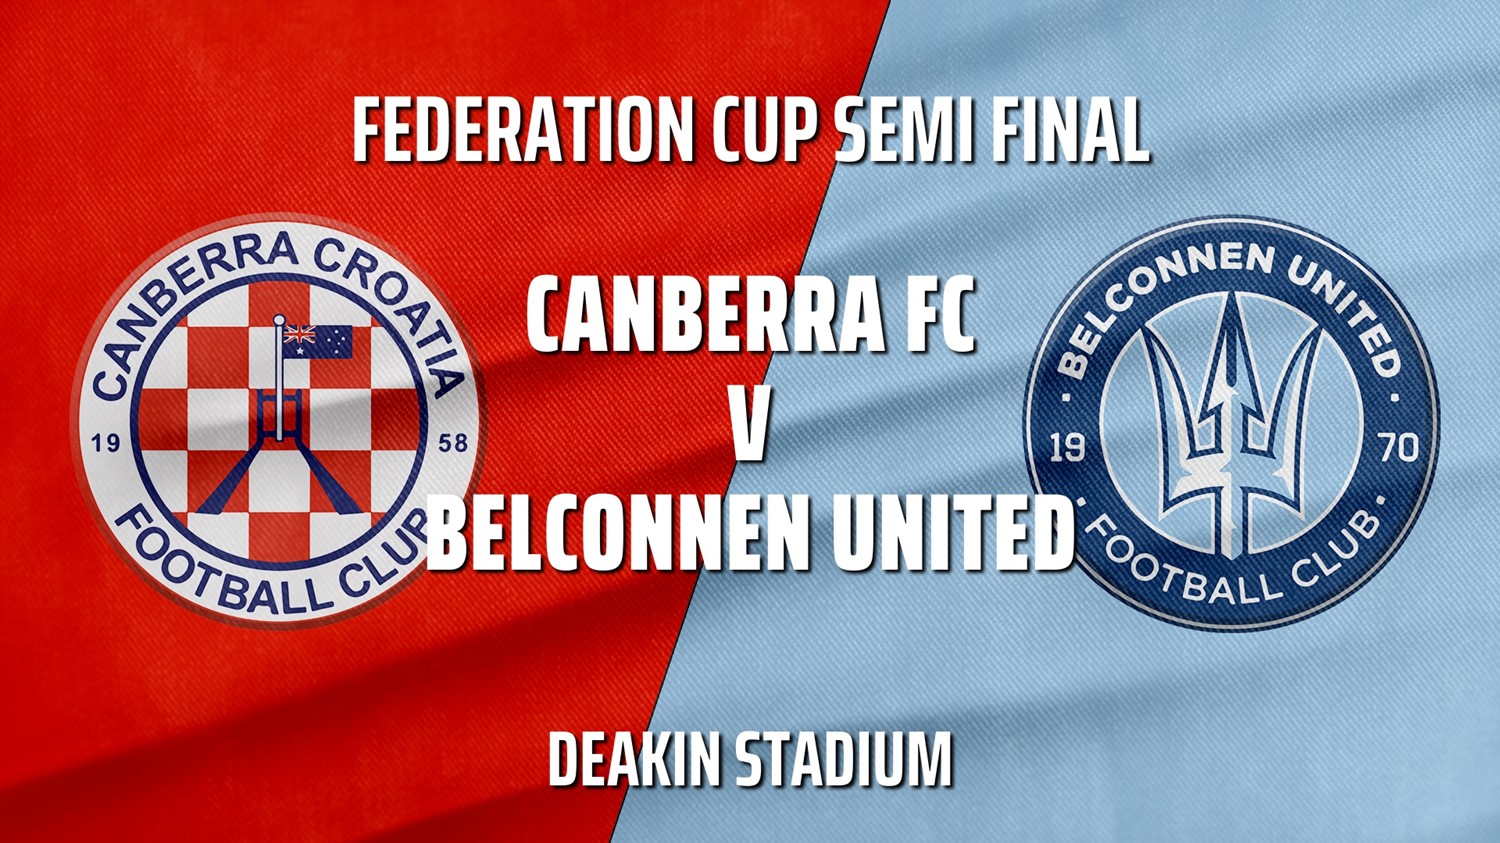 210512-Federation Cup Semi Final - Canberra FC (women) v Belconnen United (women) Slate Image